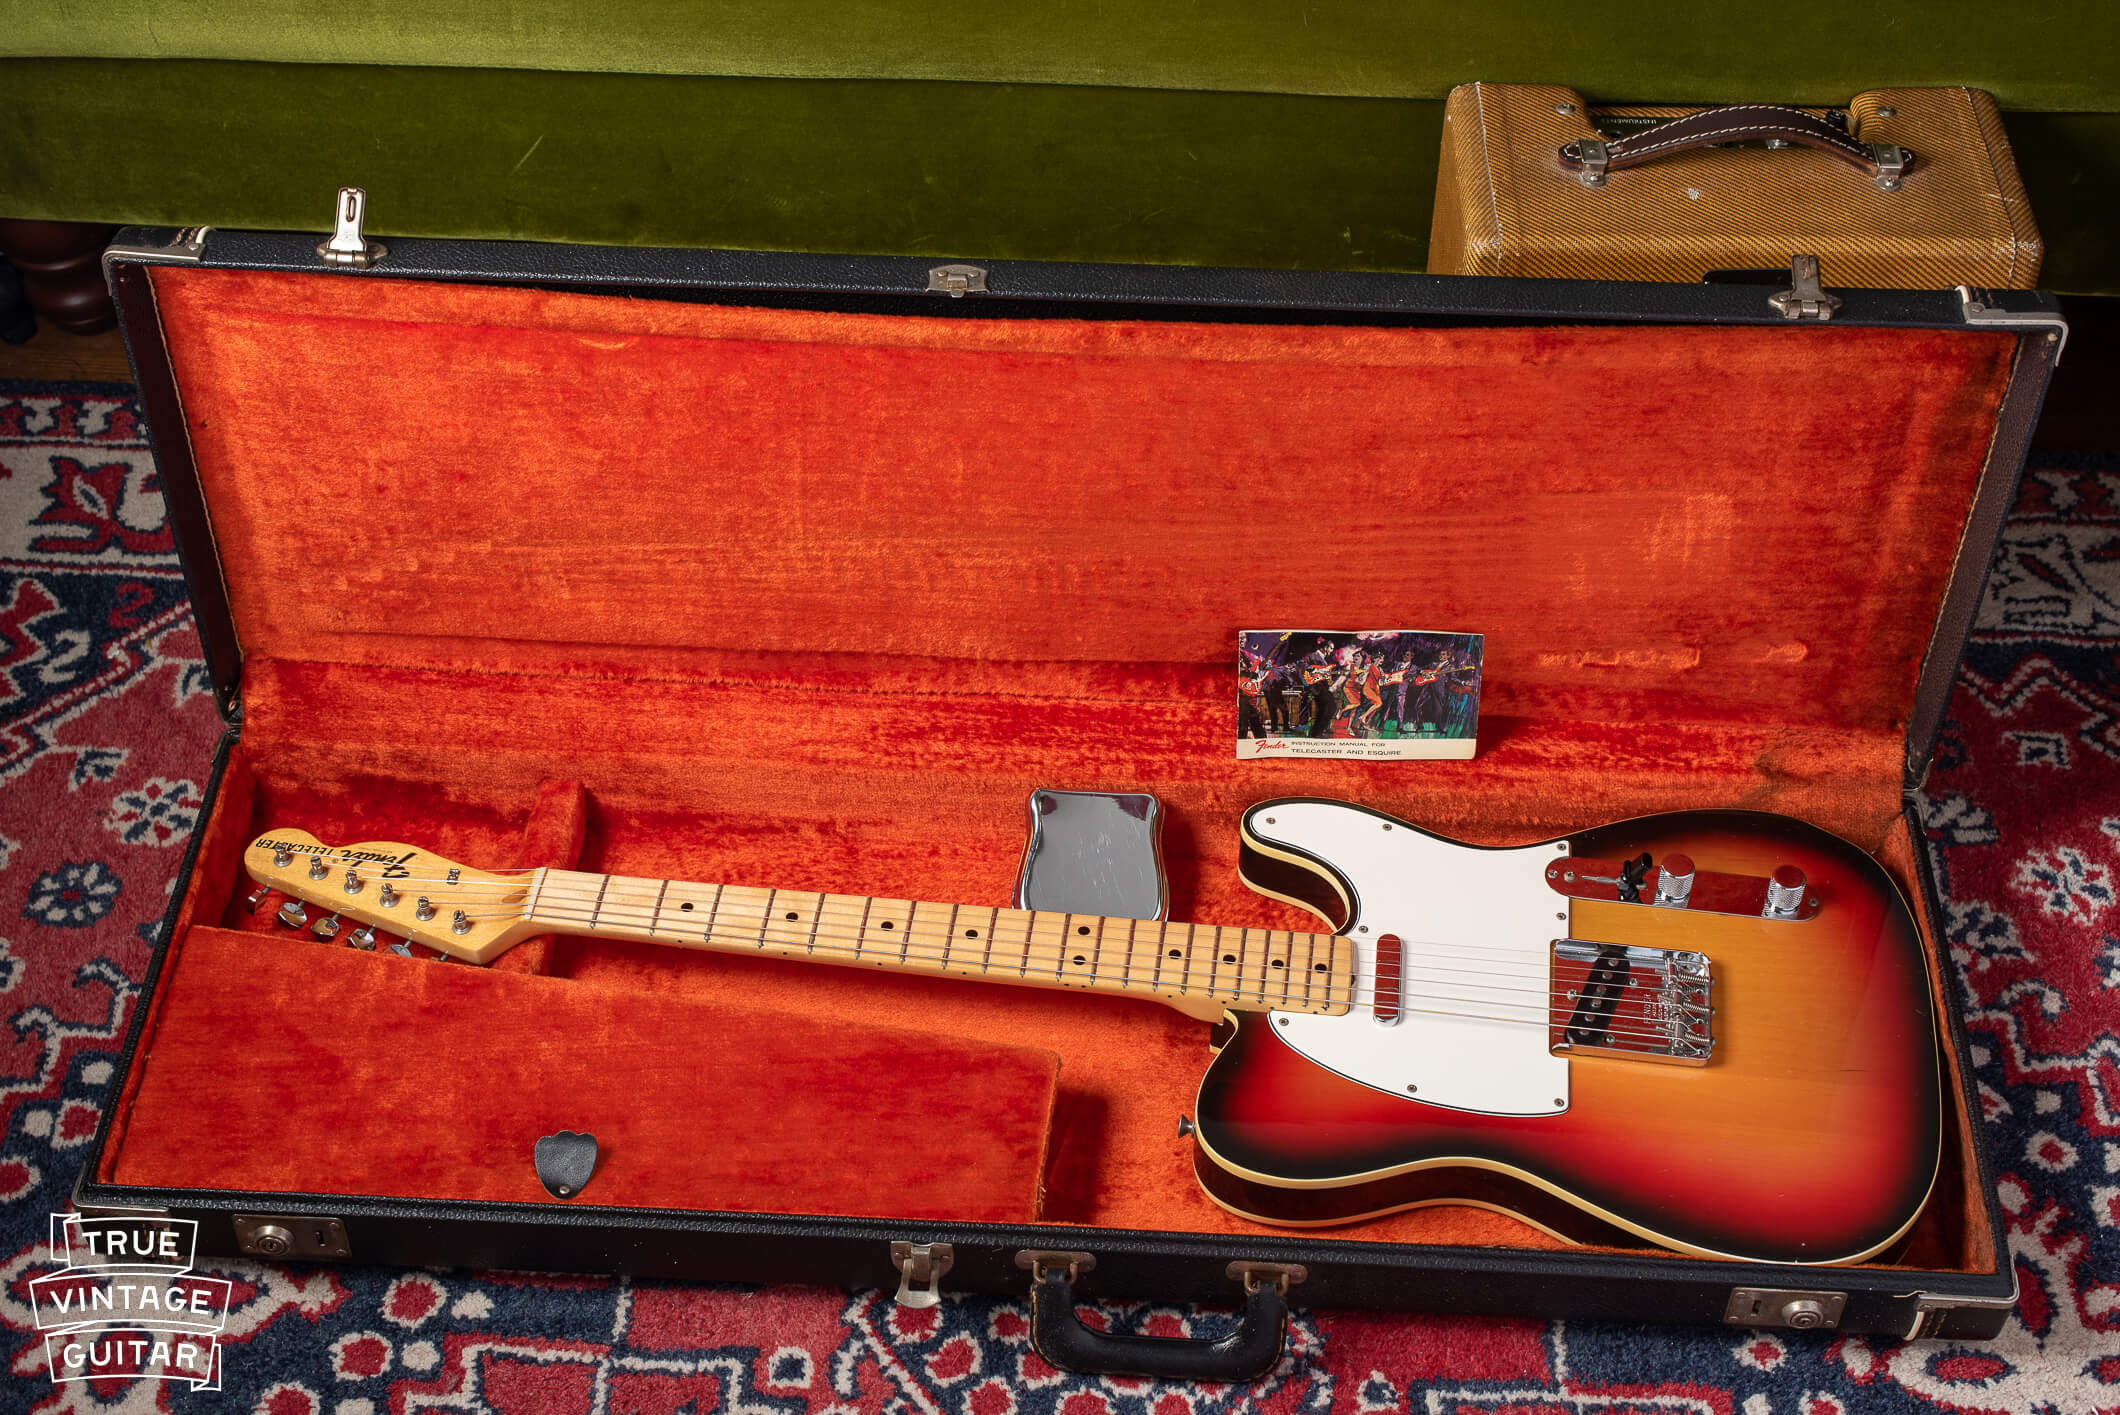 1971 Fender Telecaster Custom guitar with Sunburst finish and double white edge binding